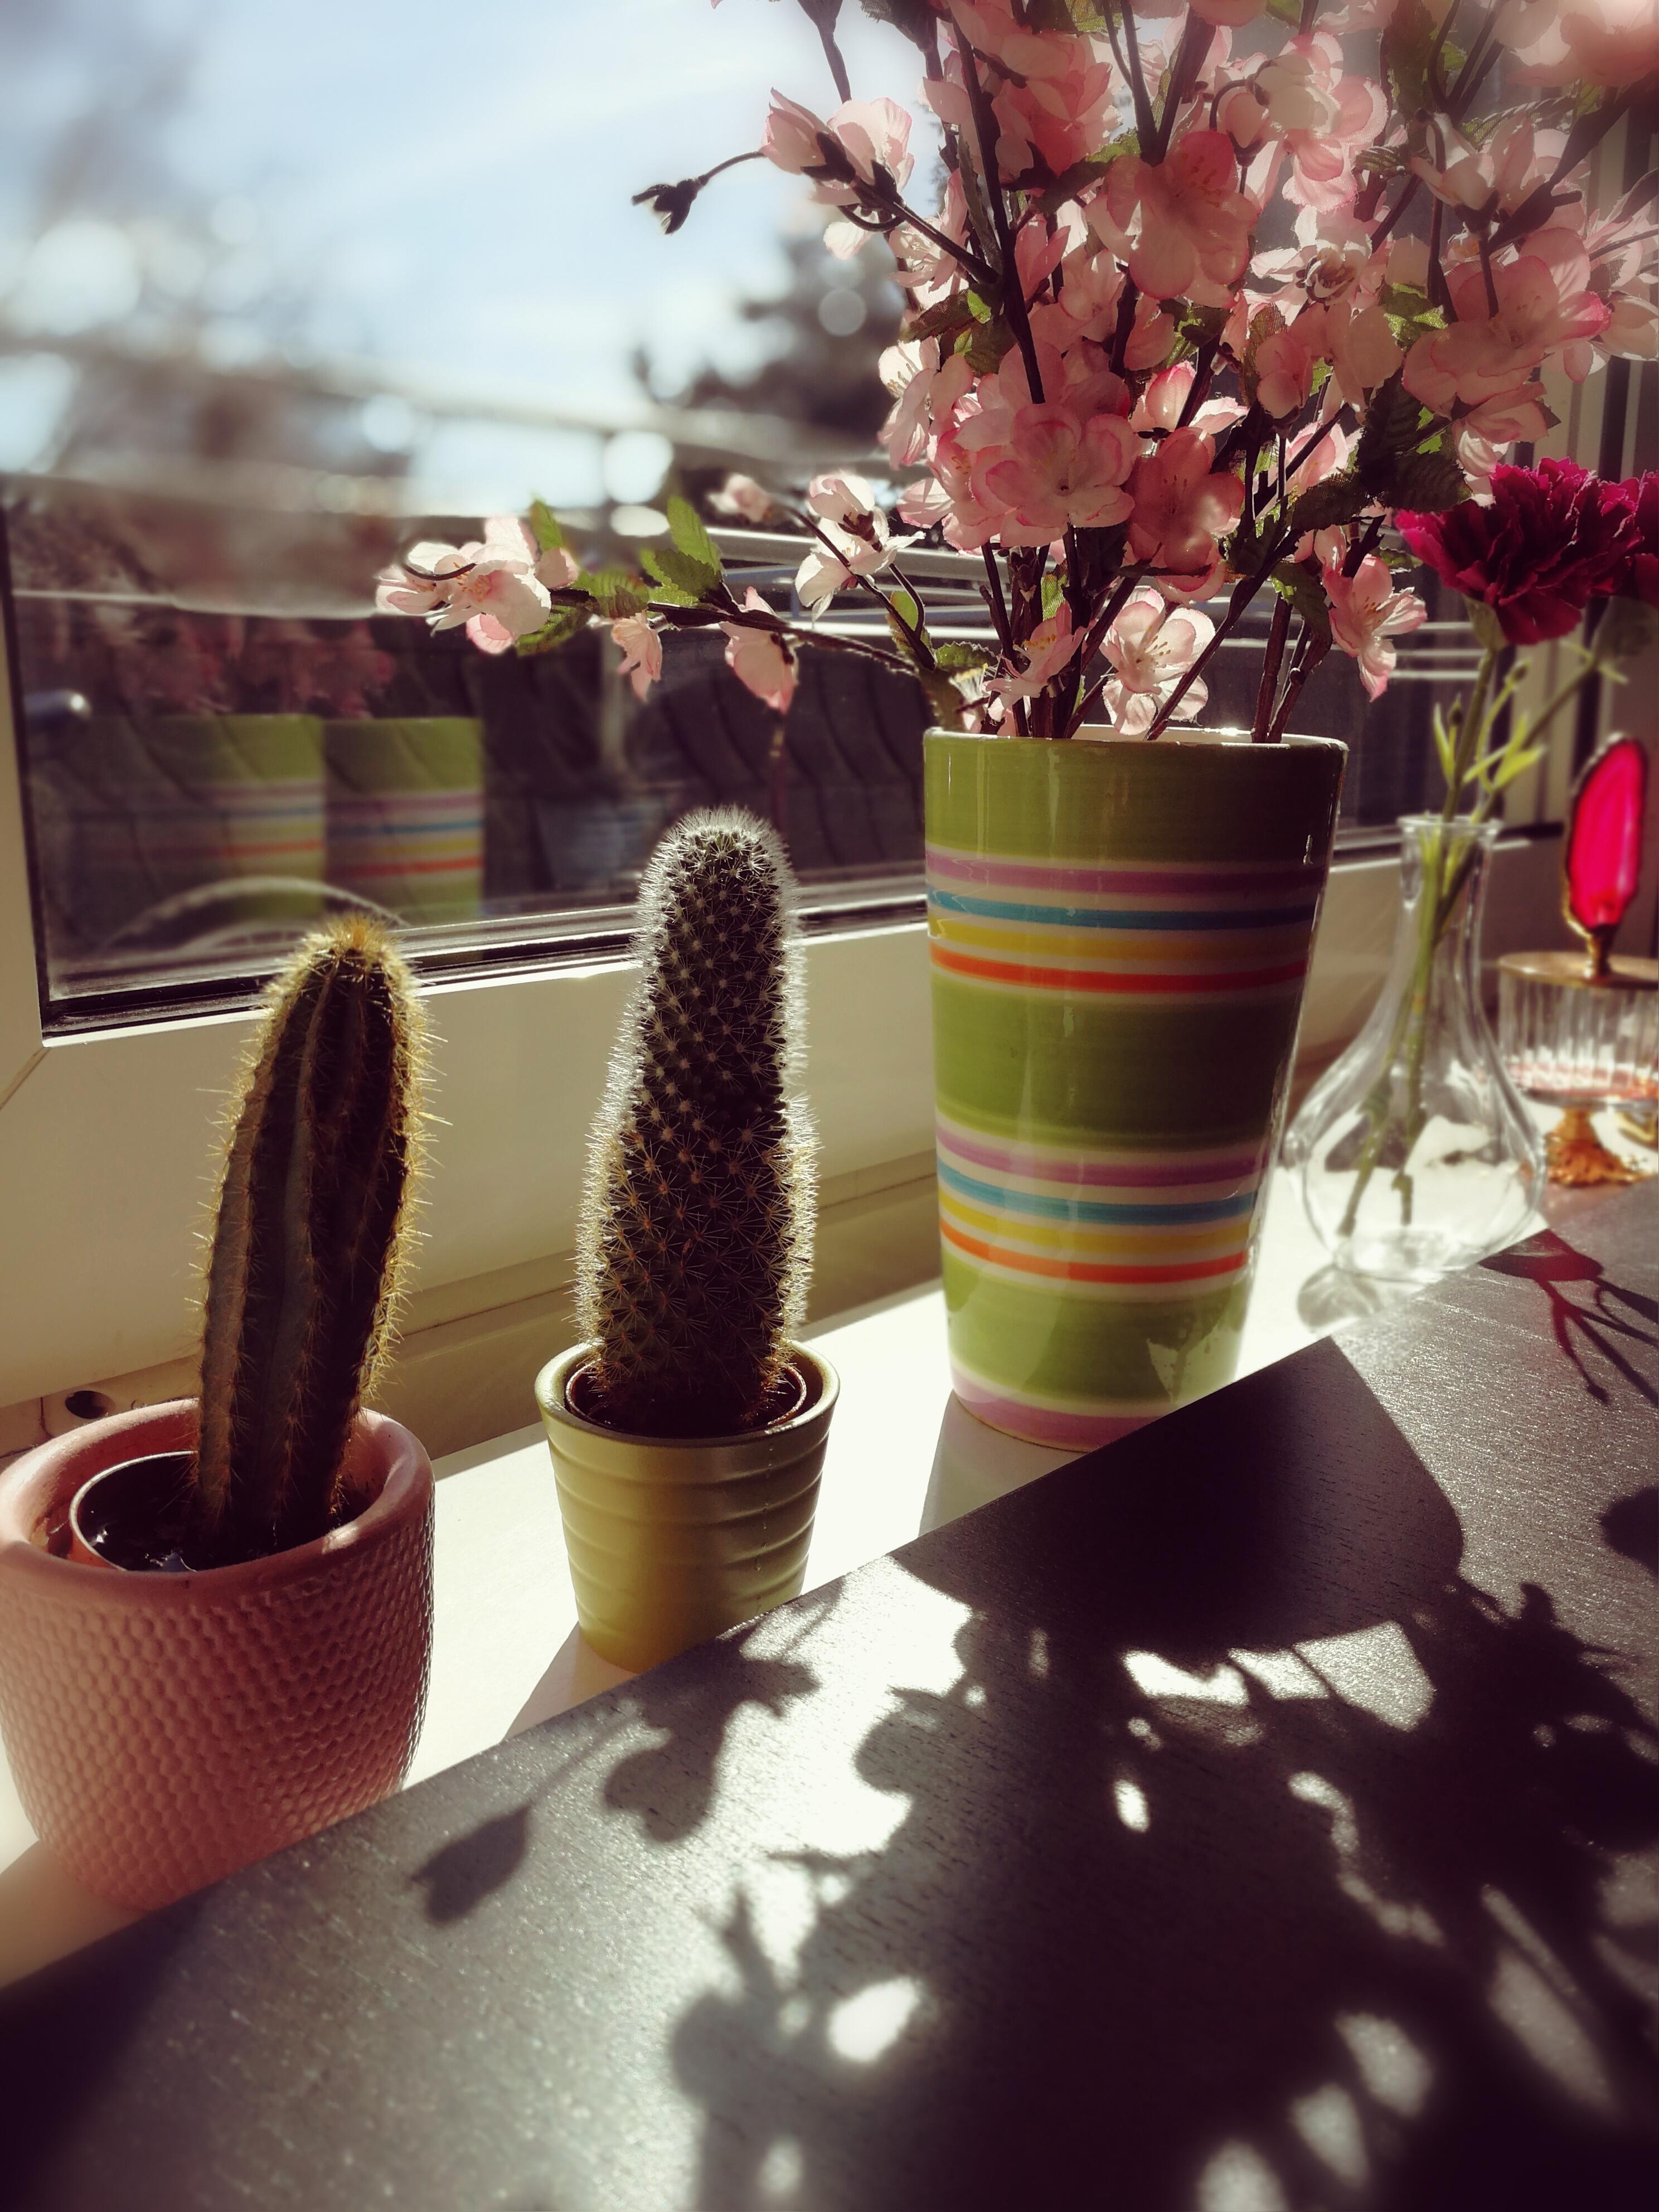 ...endlich bist du da, lieber #Frühling 🌸🌷🥀💮💐☘️🌻
#Sonne #Kakteen #GuteLaune
